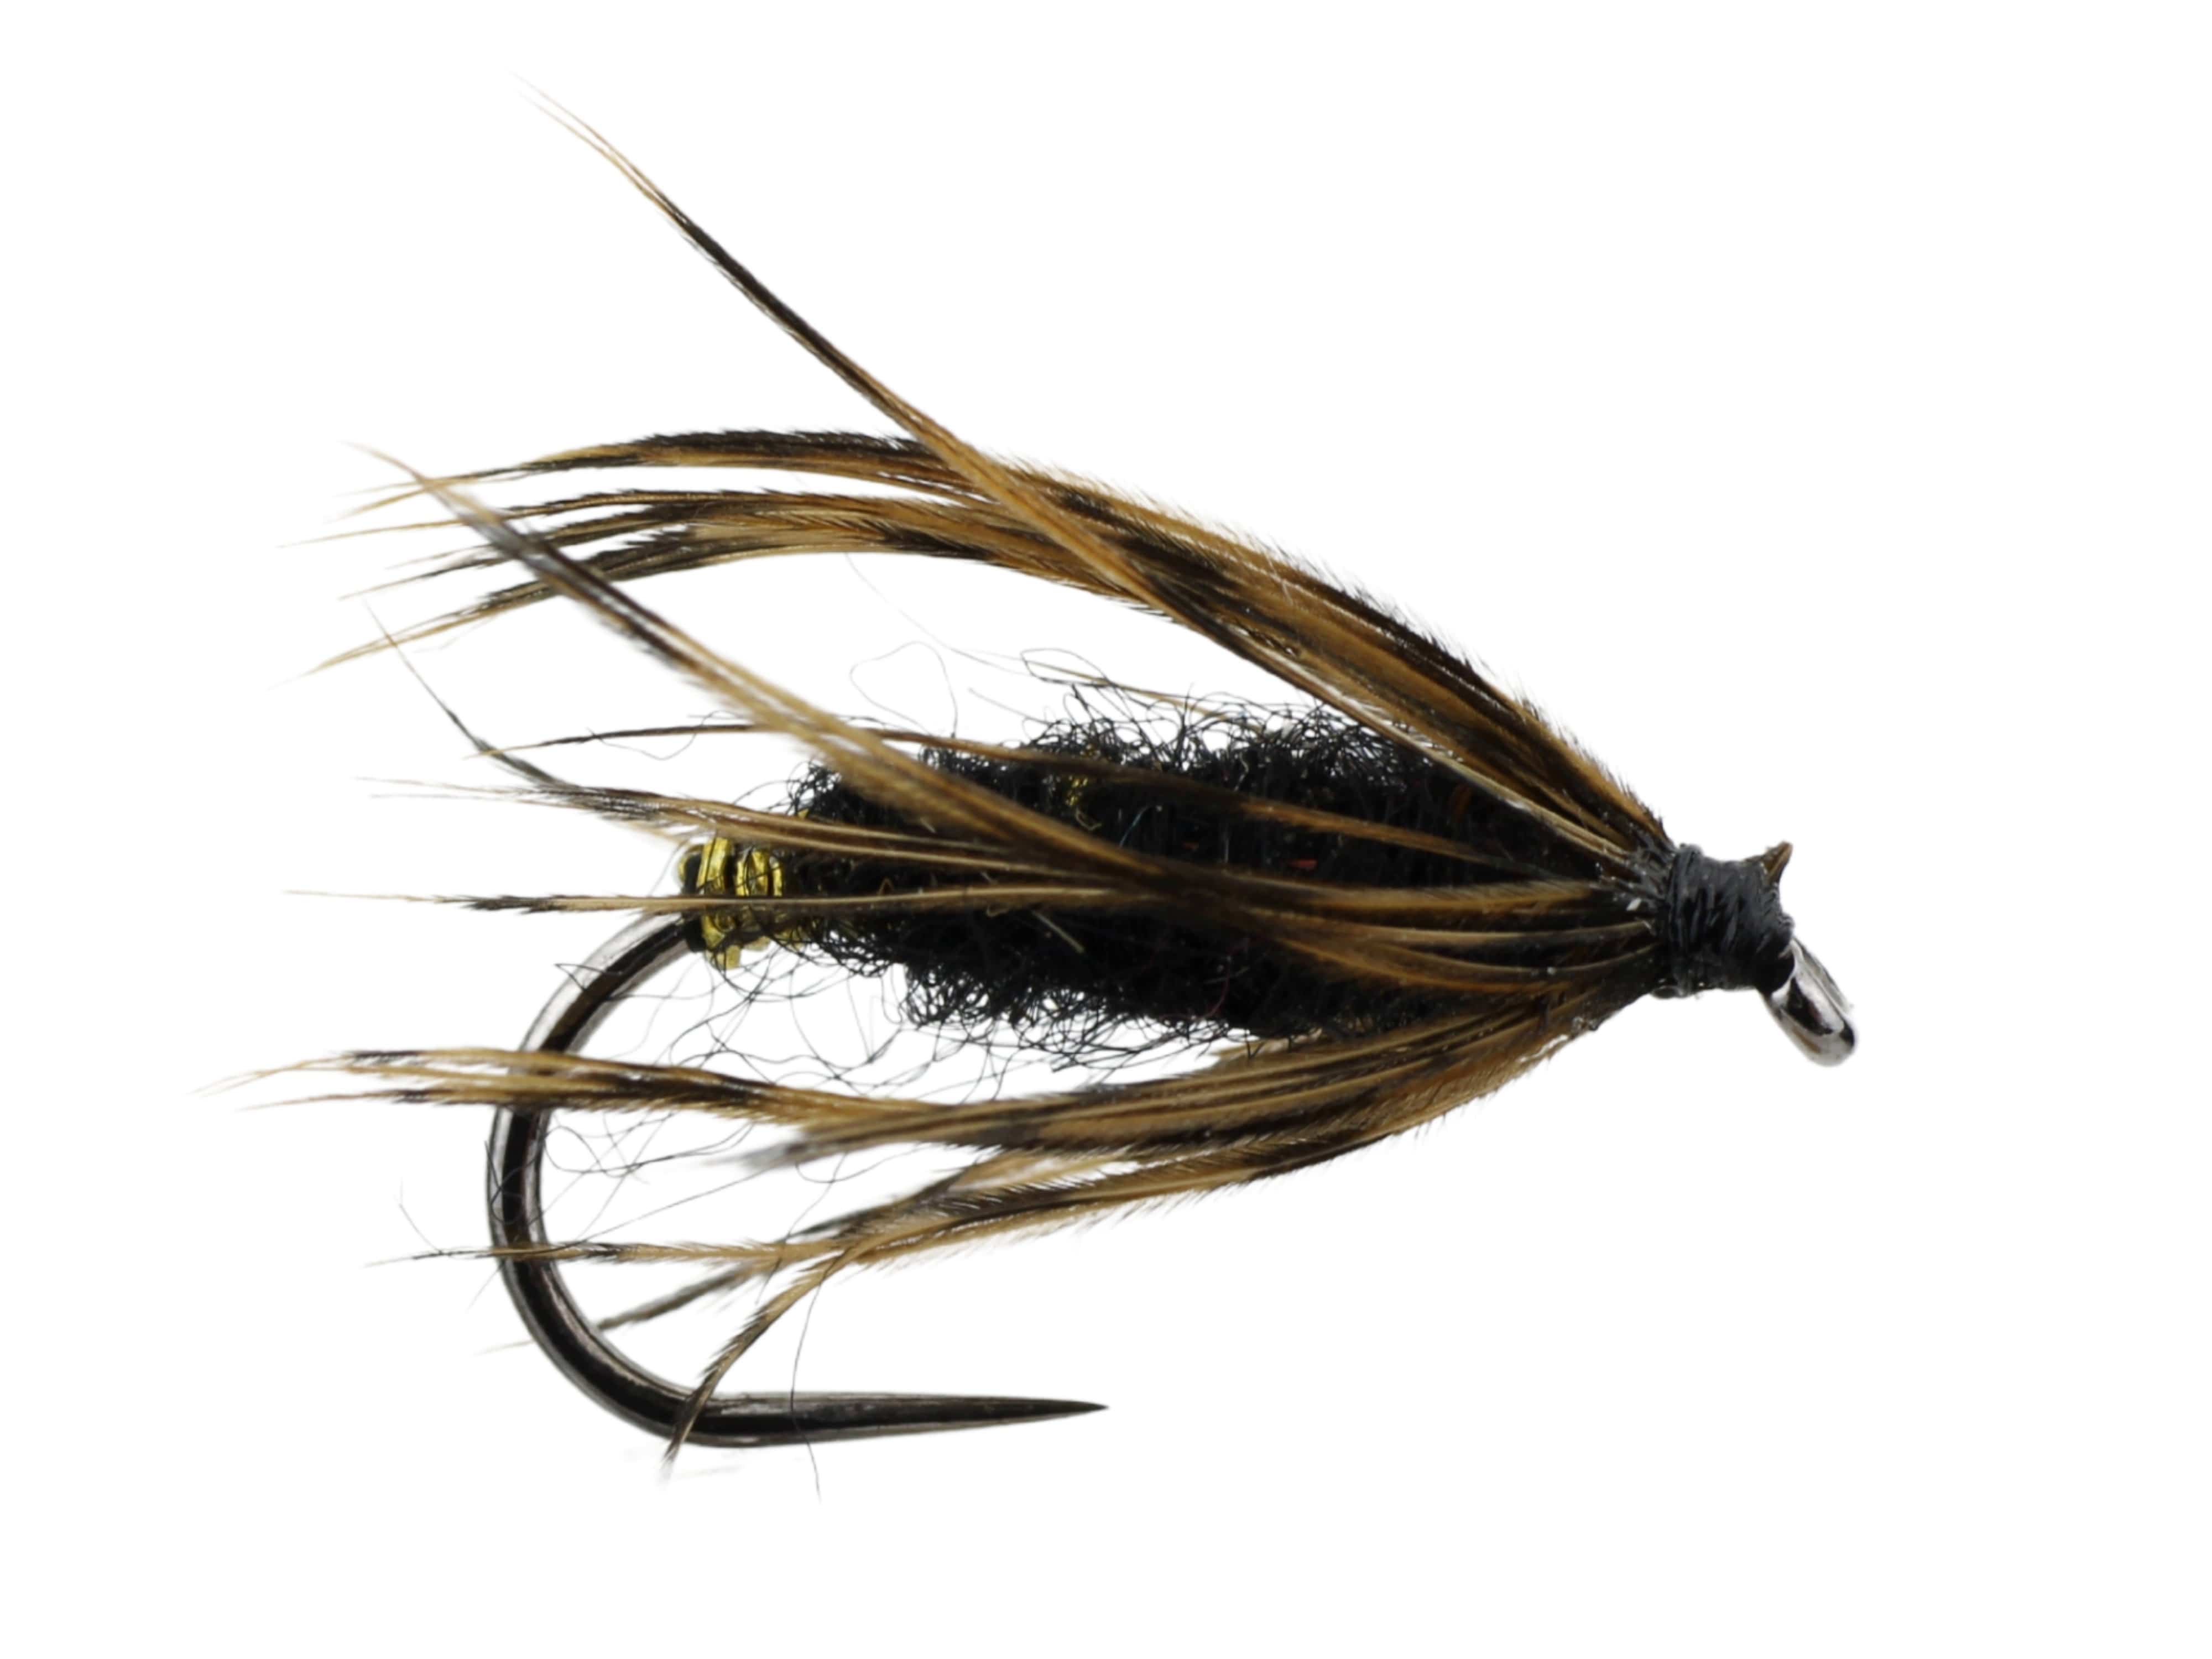 Wild Water Fly Fishing Black Killer Kebari Tenkara Fly, size 12, qty. 6